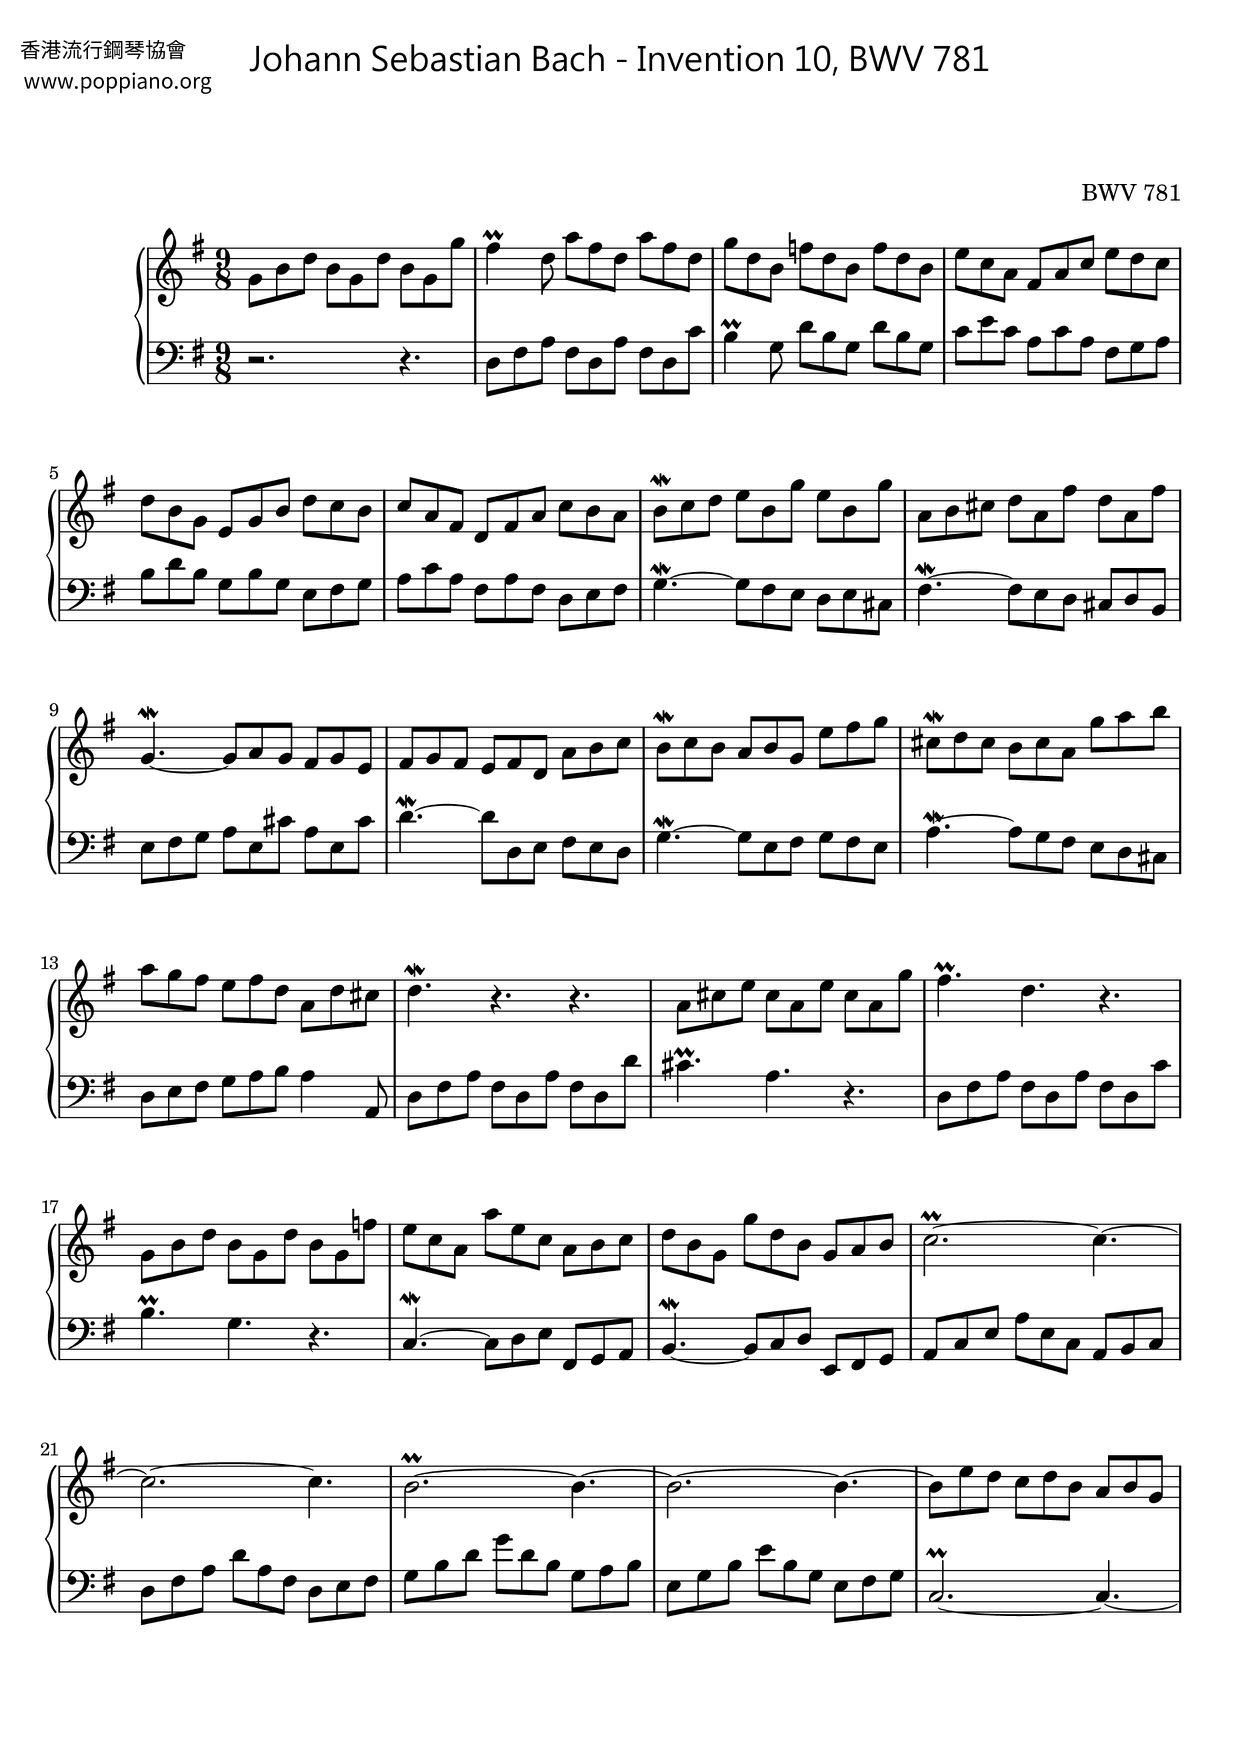 Invention 10, BWV 781 Score